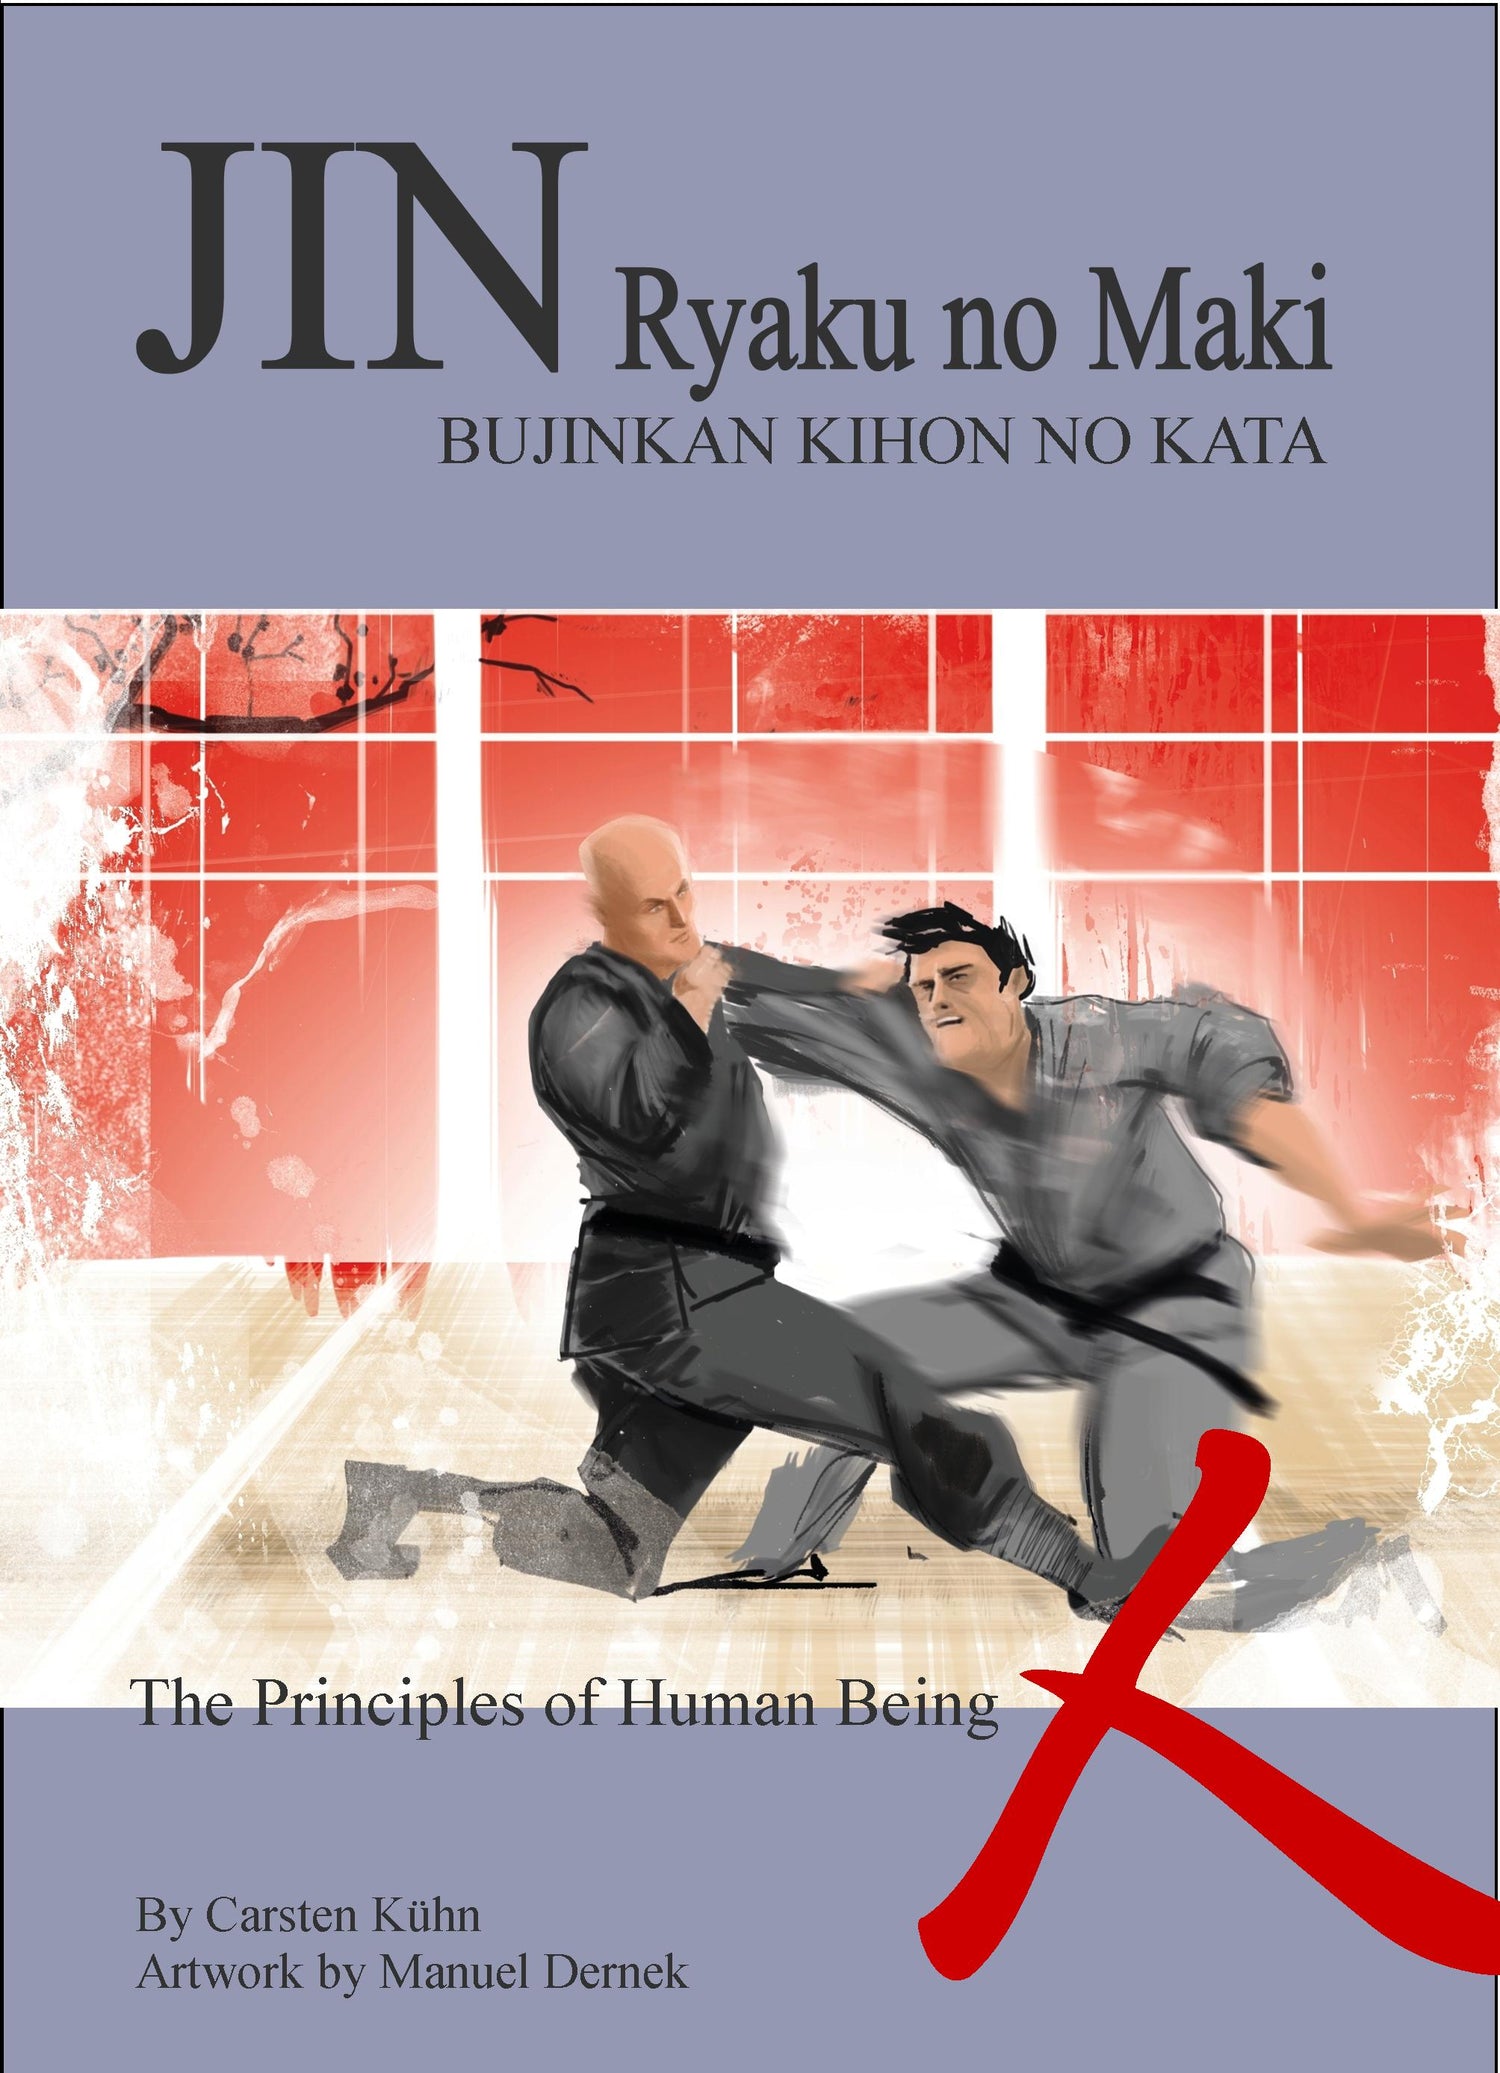 Jin Ryaku no Maki (Principles of Man) Book by Carsten Kuhn - Budovideos Inc